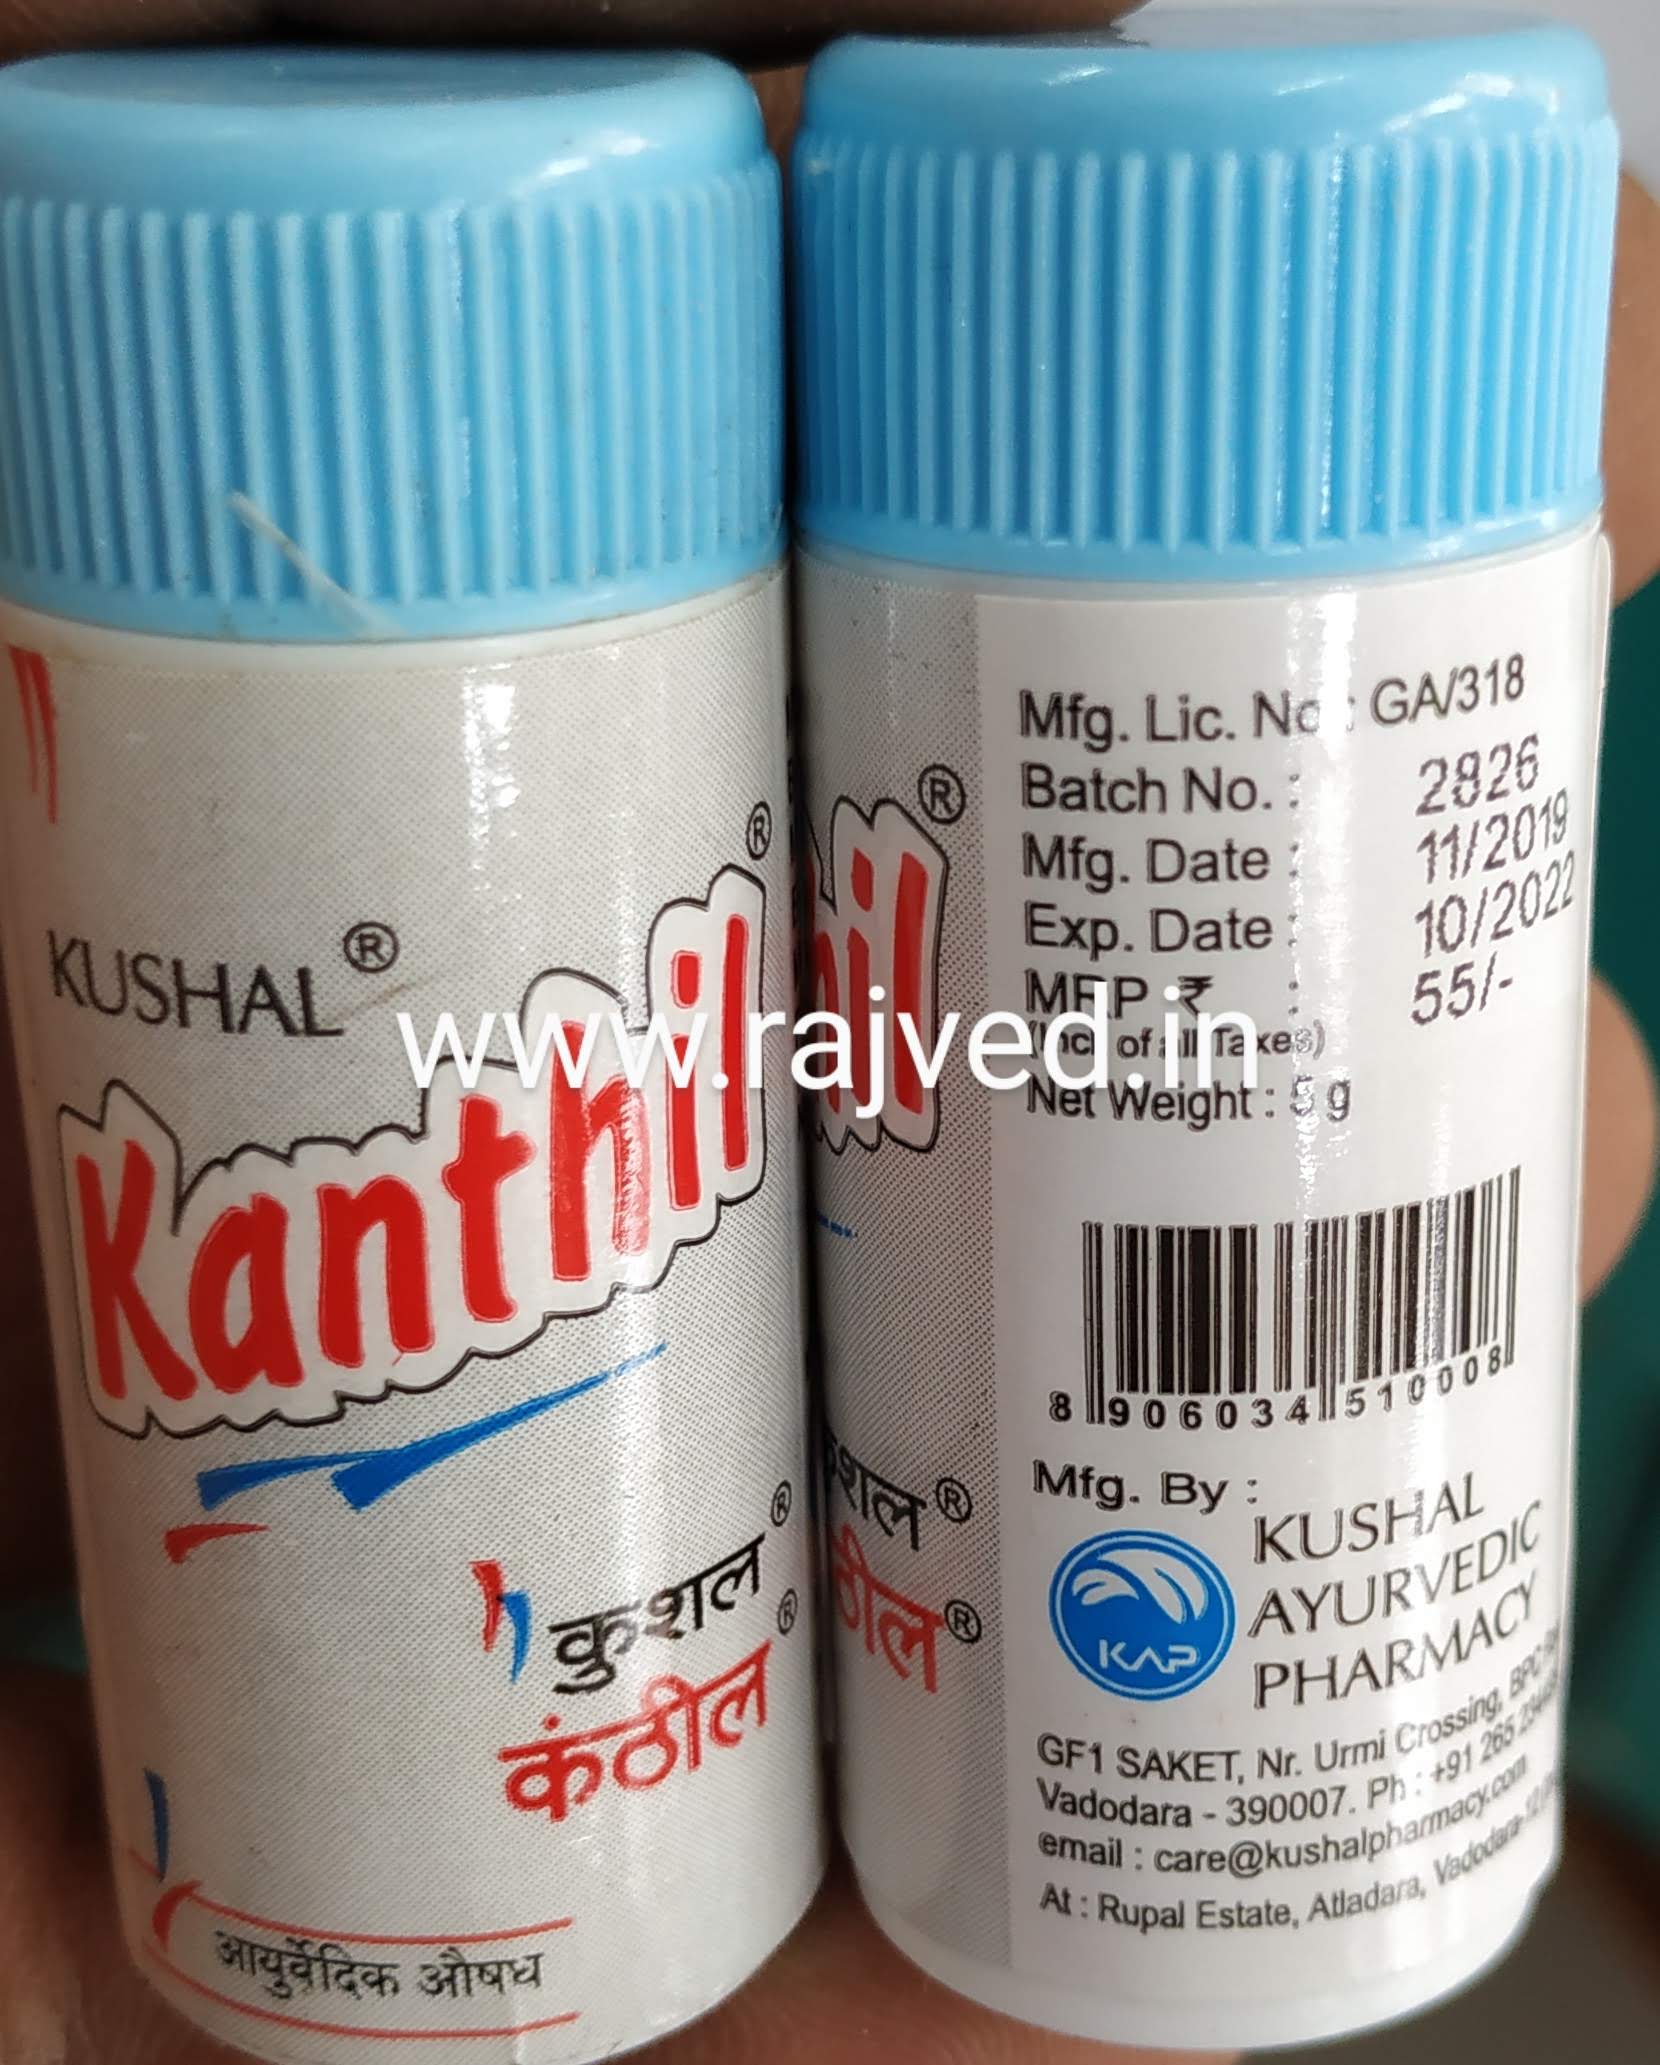 kushal kanthil 50gm Kushal Ayurvedic Pharmacy